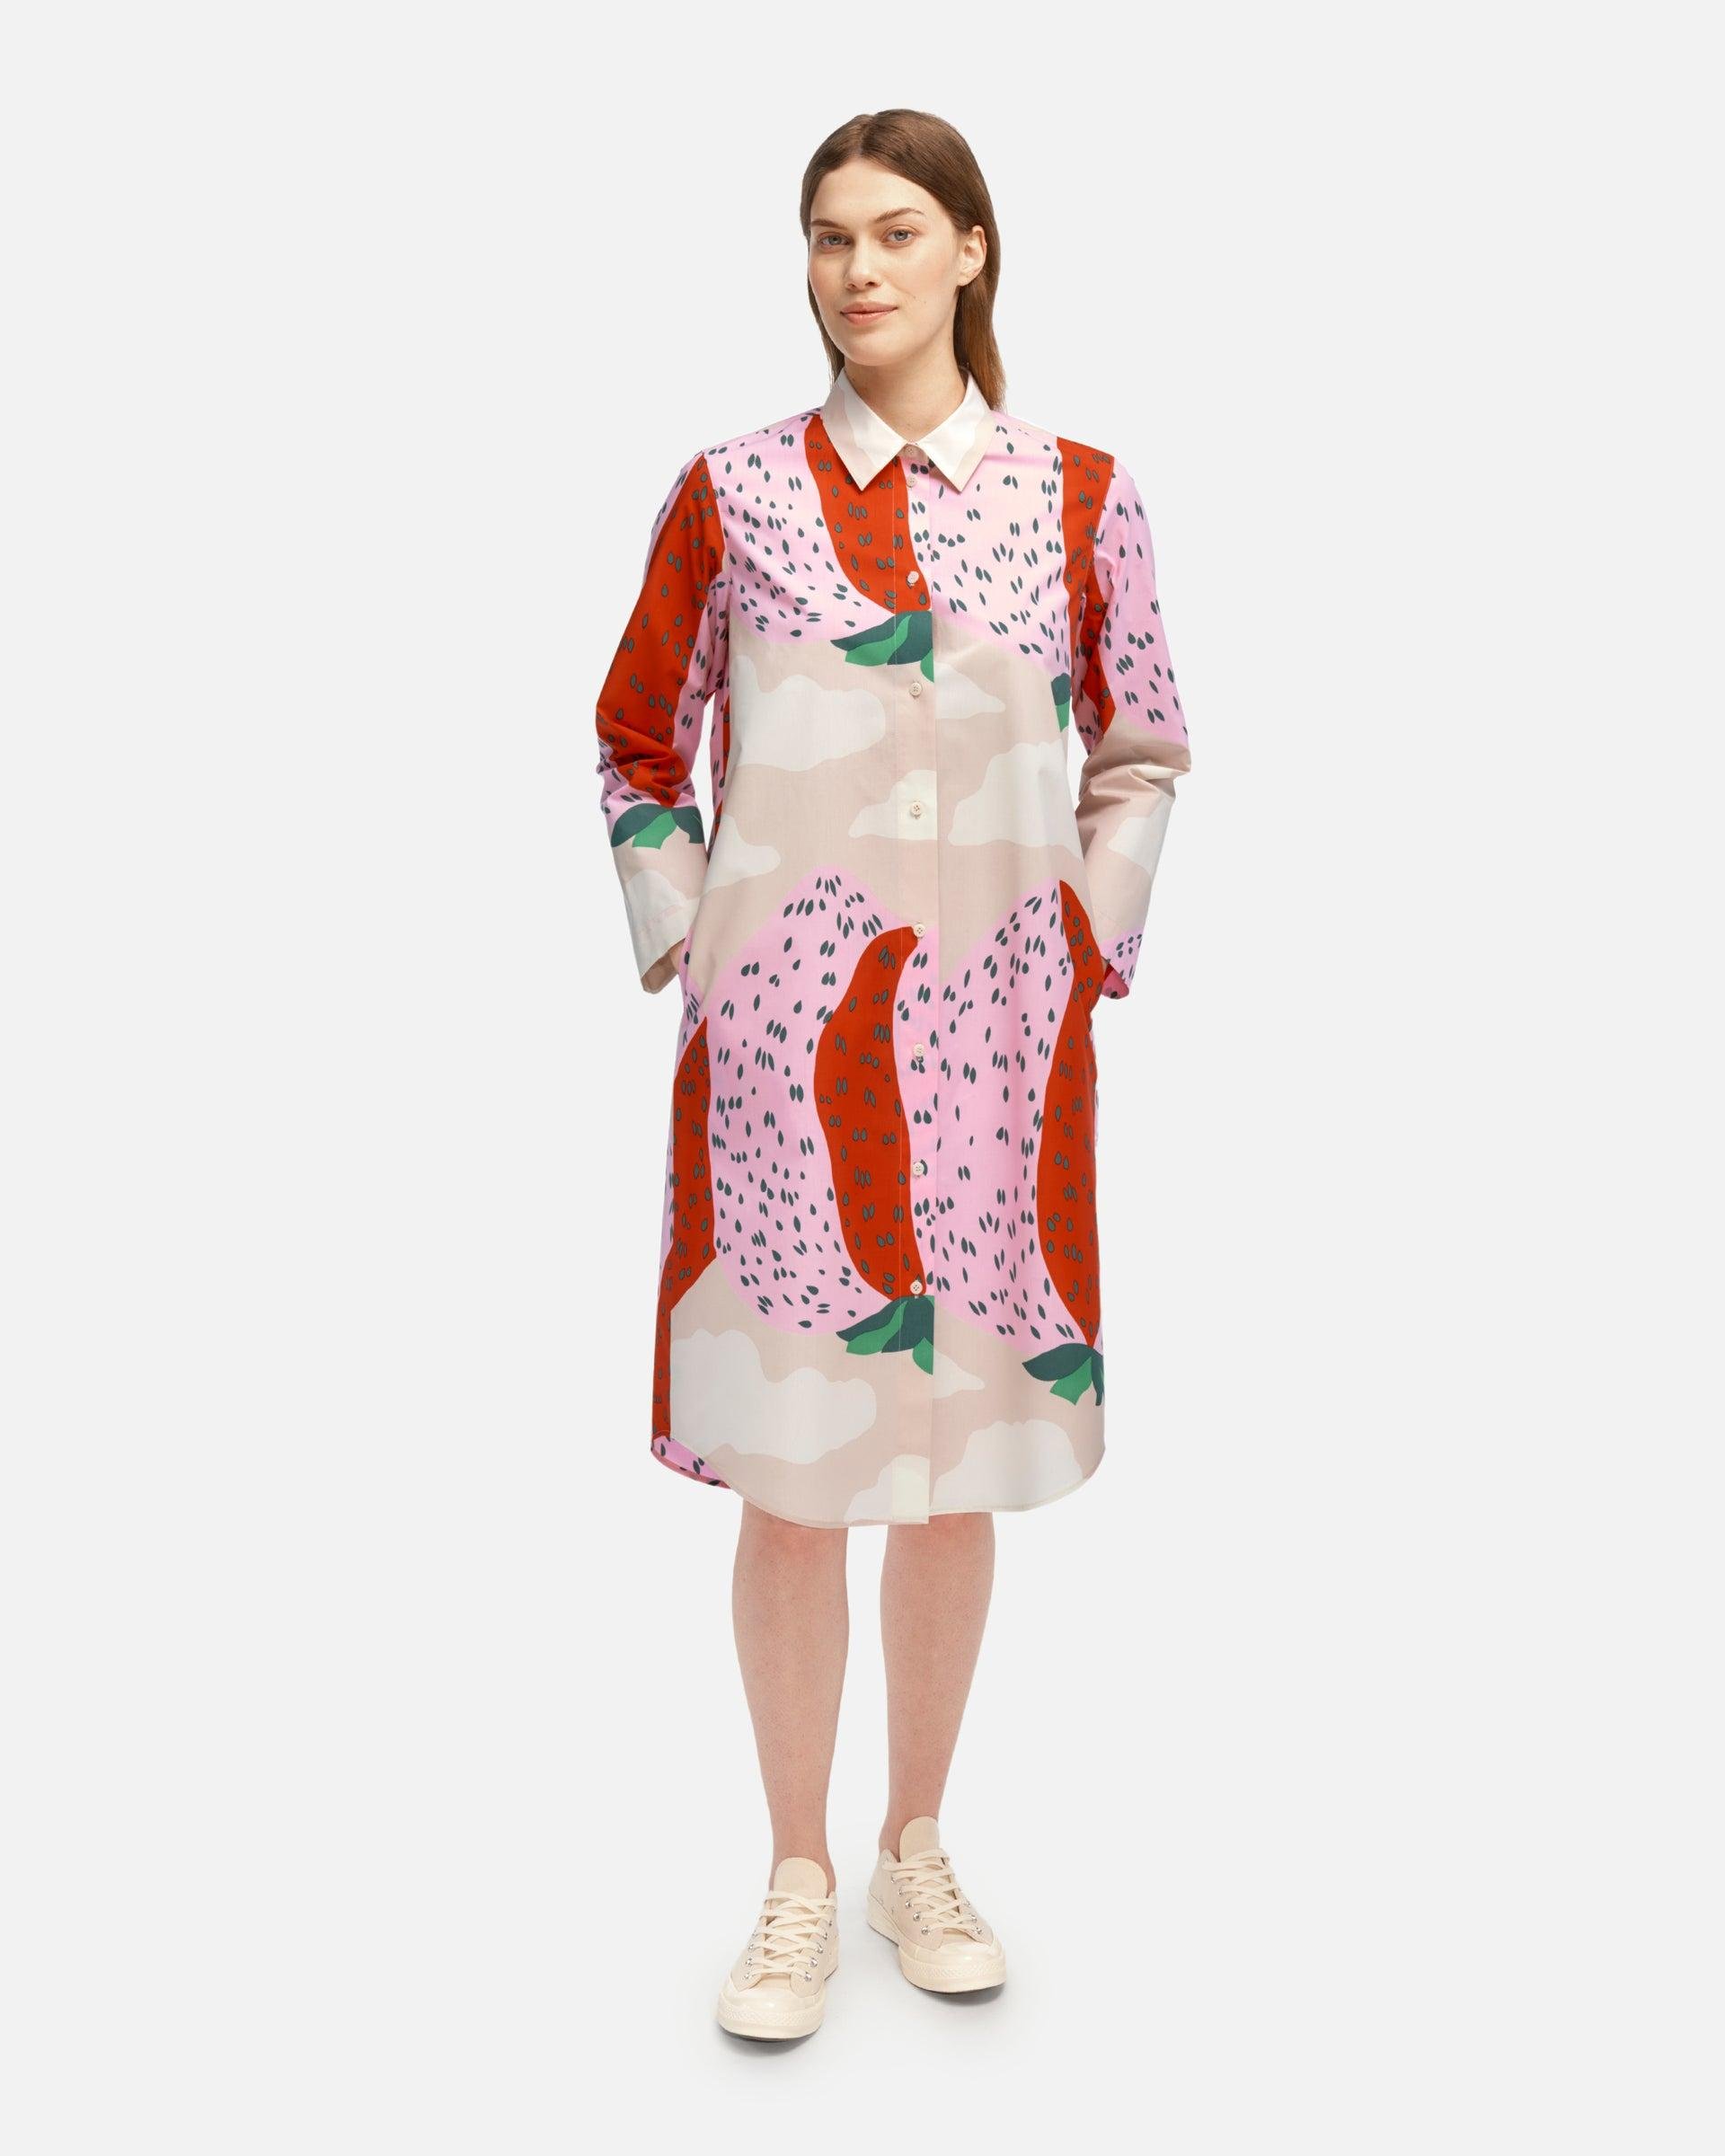 Minta Mansikkavuoret Shirt Dress 110cm by MARIMEKKO